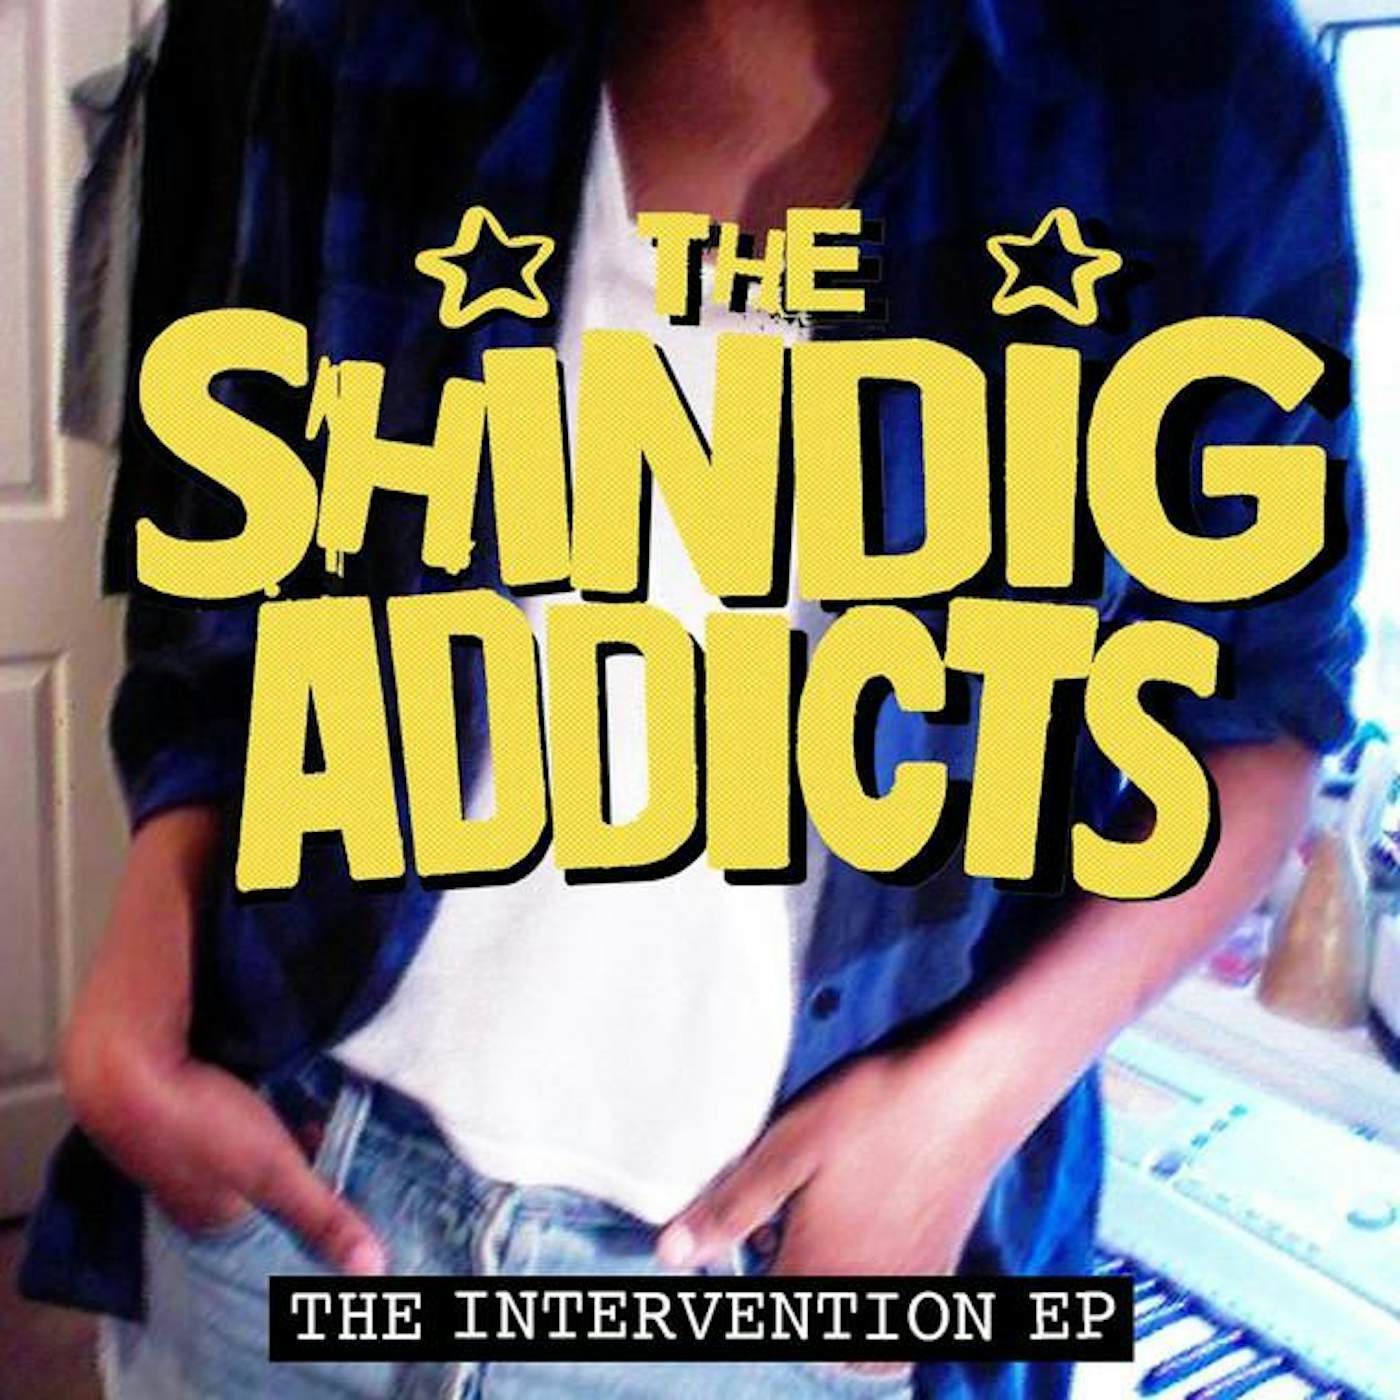 The Shindig Addicts